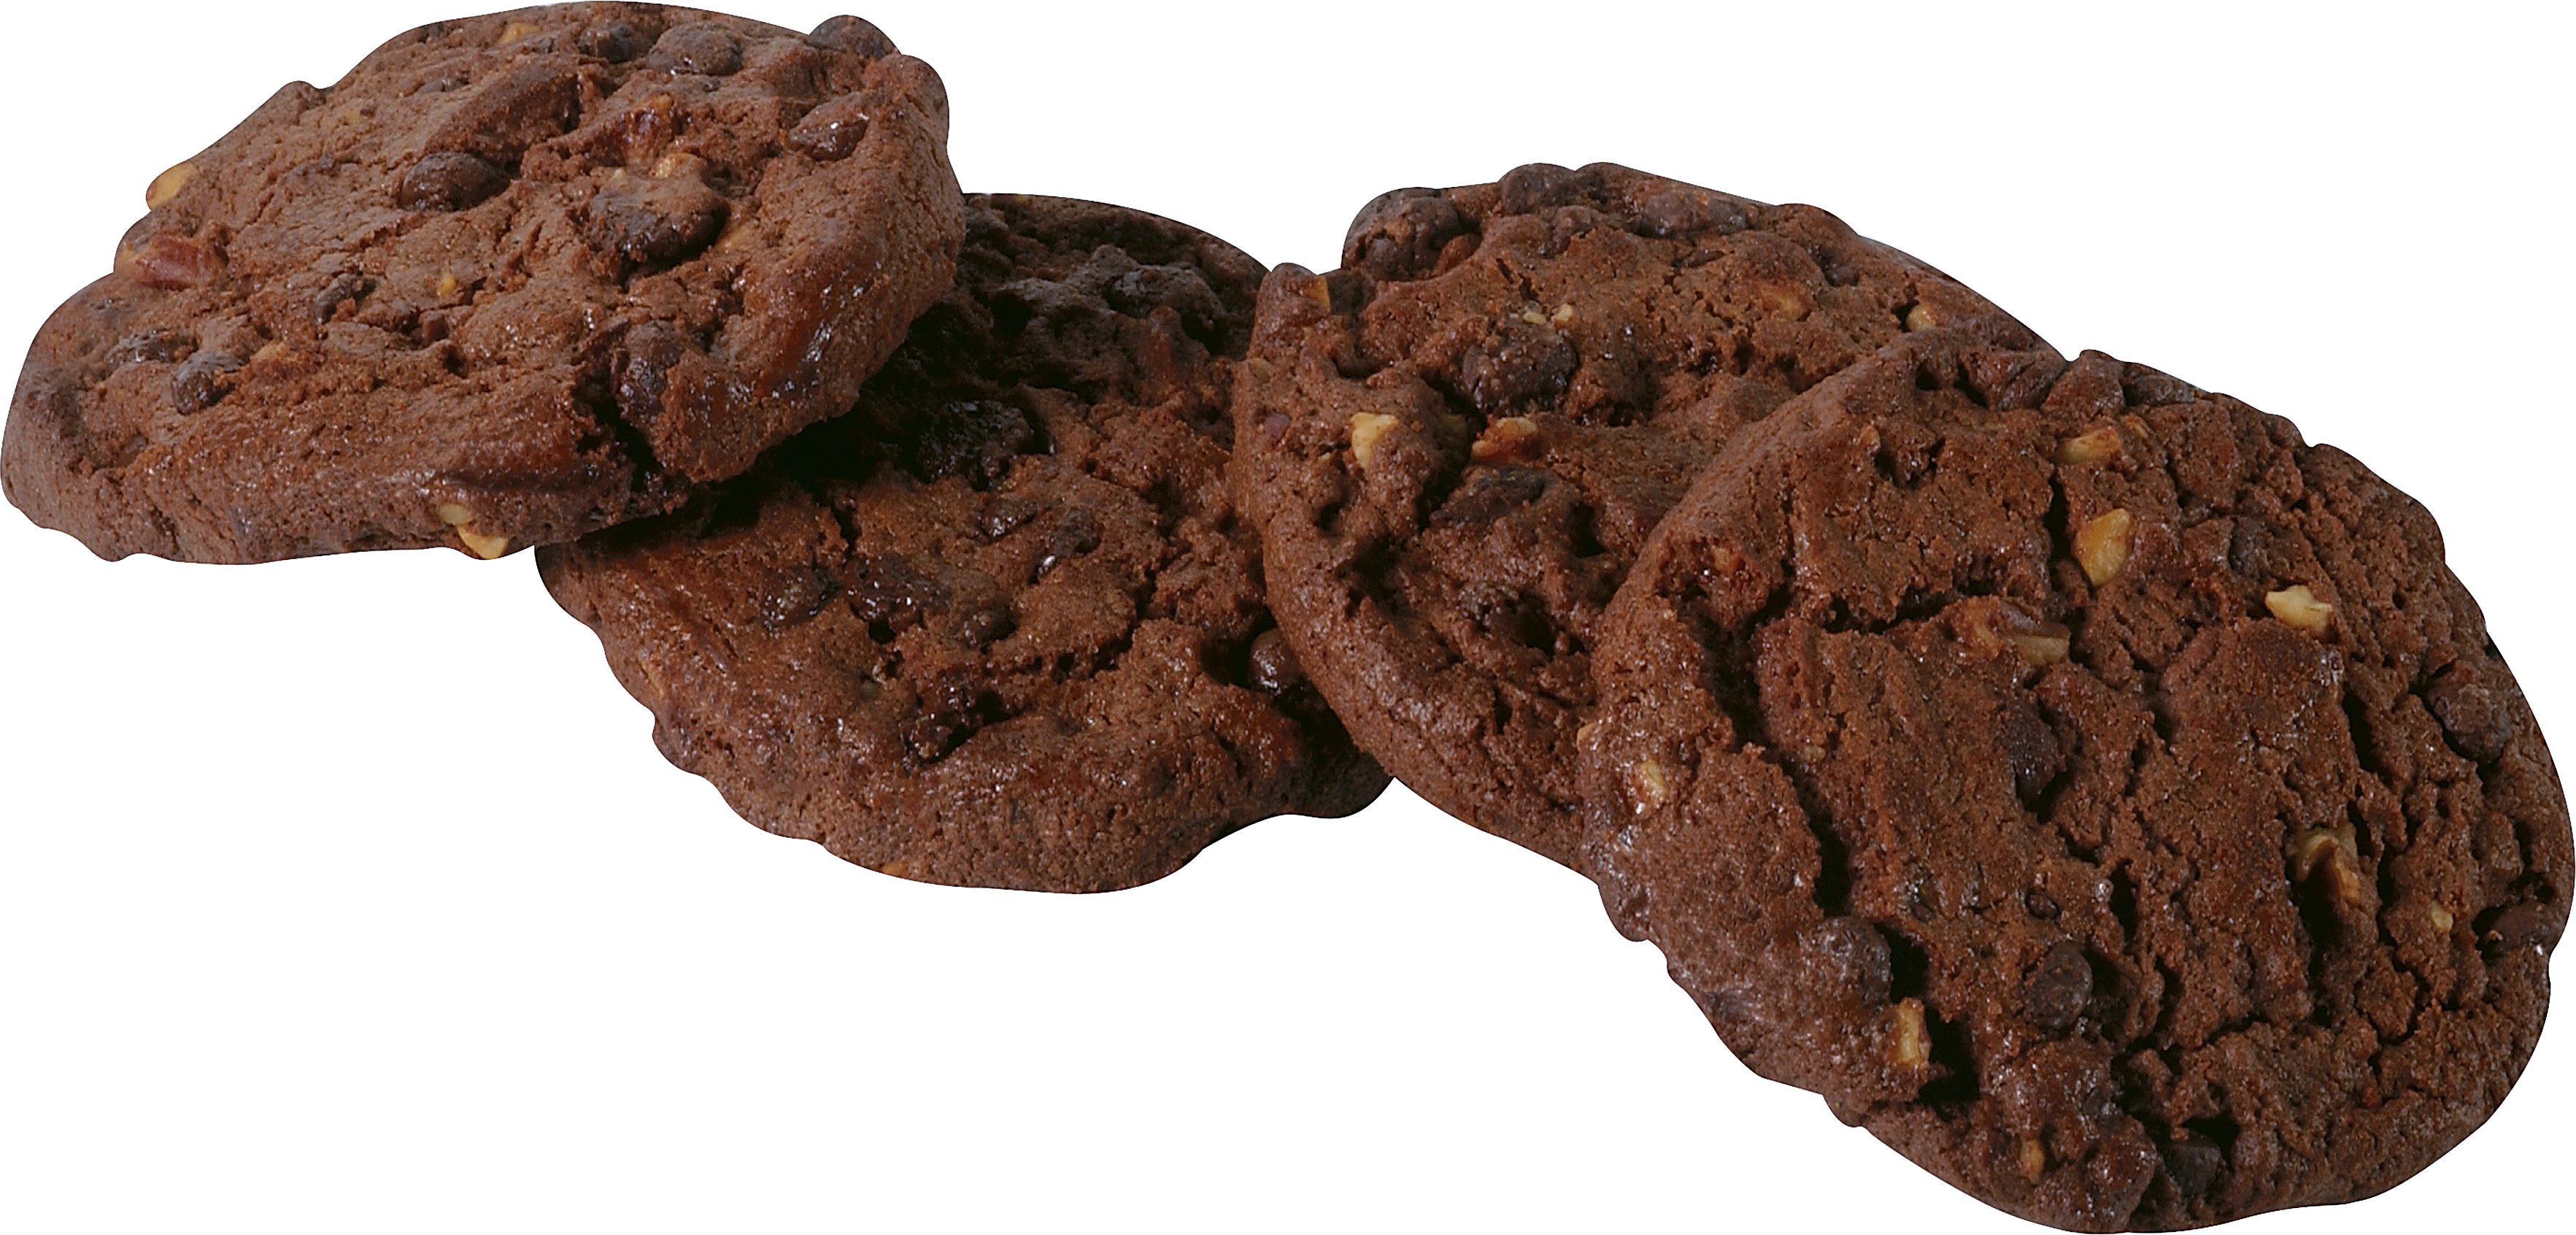 Cookies PNG Image - PurePNG | Free transparent CC0 PNG ...